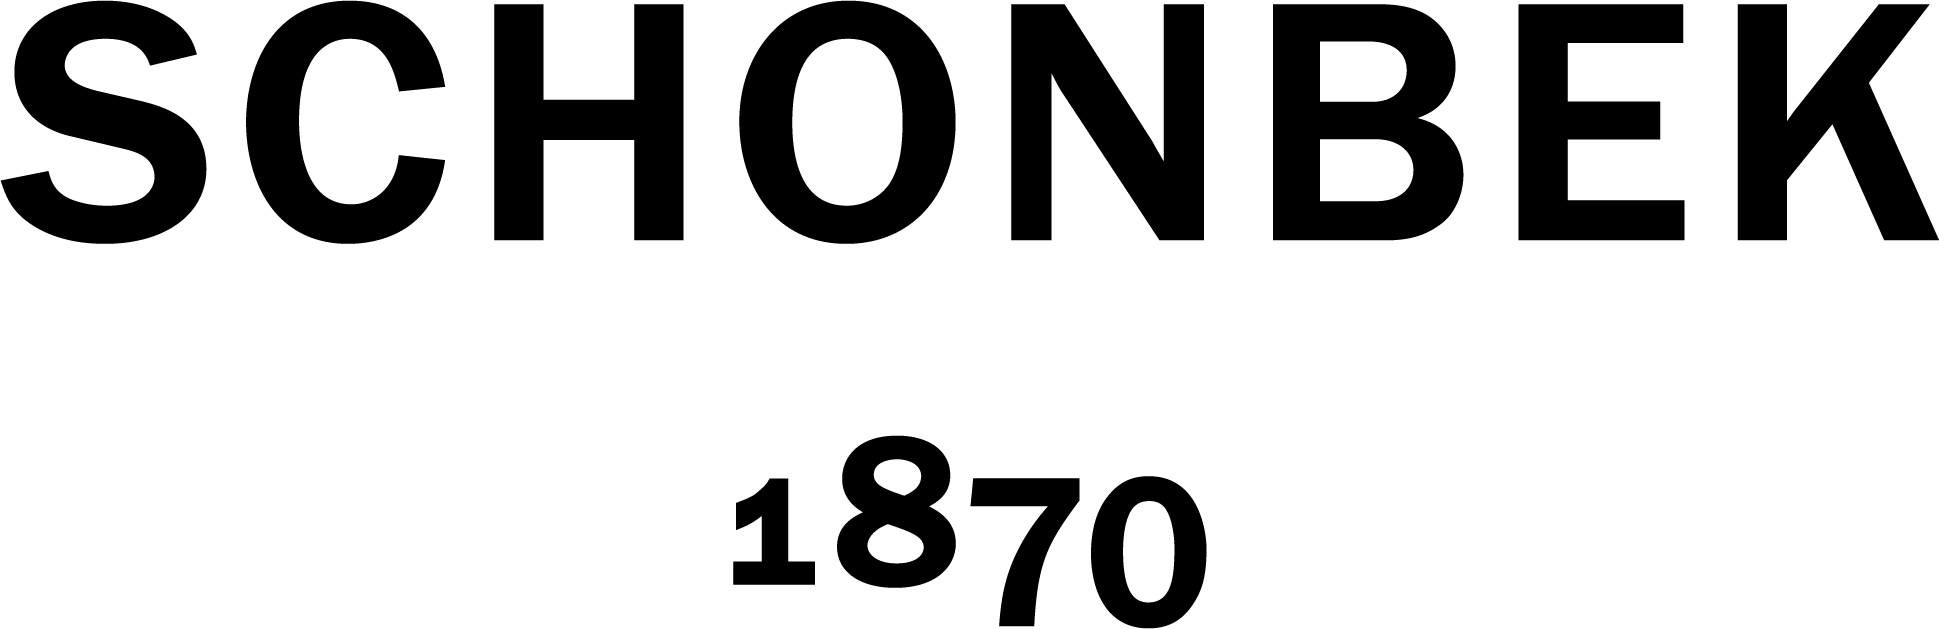 Schonbek Logo